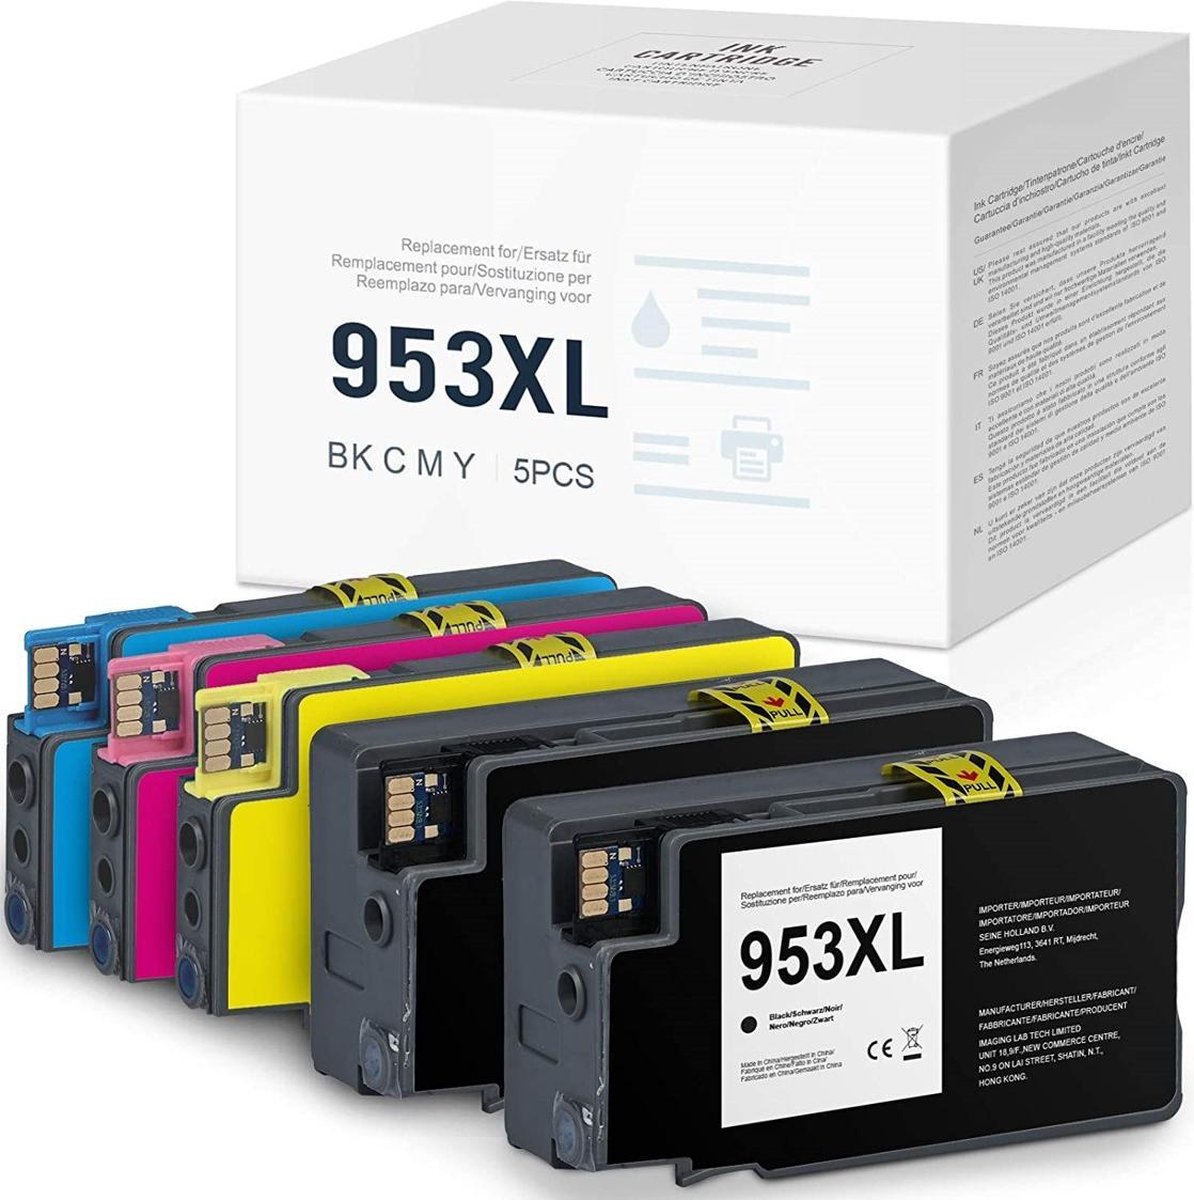 G&G 953 XL Compatibele HP 953XL 953 XL Inkt Cartridges voor HP Officejet Pro 8710 8720 8715 8730 8740 7740 7720 8210 8718 8719 8725 8218 (5 Multipack)